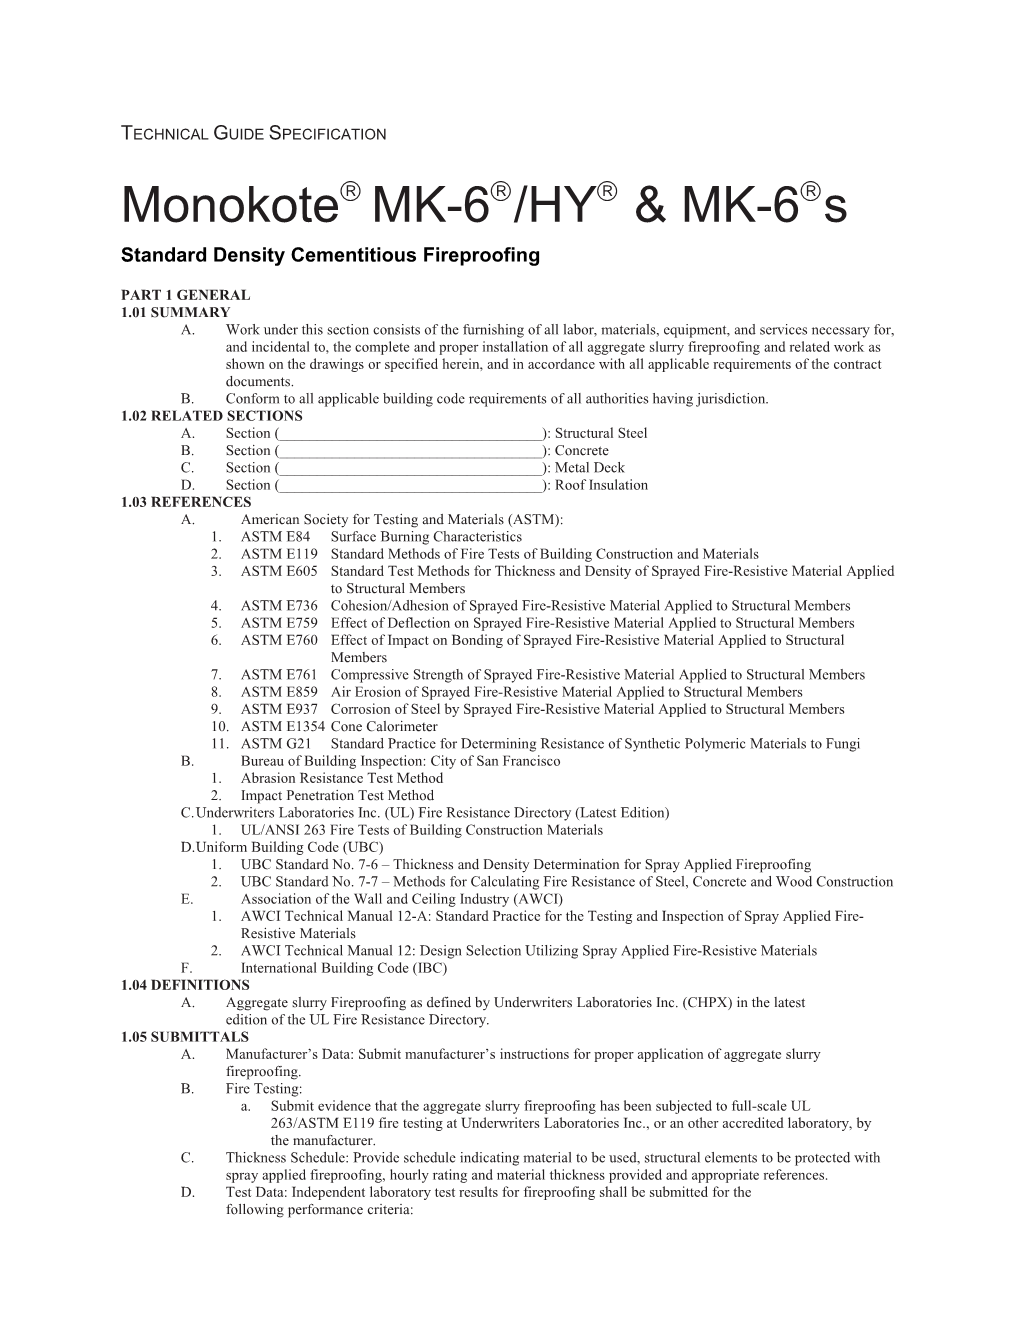 MK-511 MK 6/HY & 6S Guide Specs Fireproofing Guide Specs.Pdf